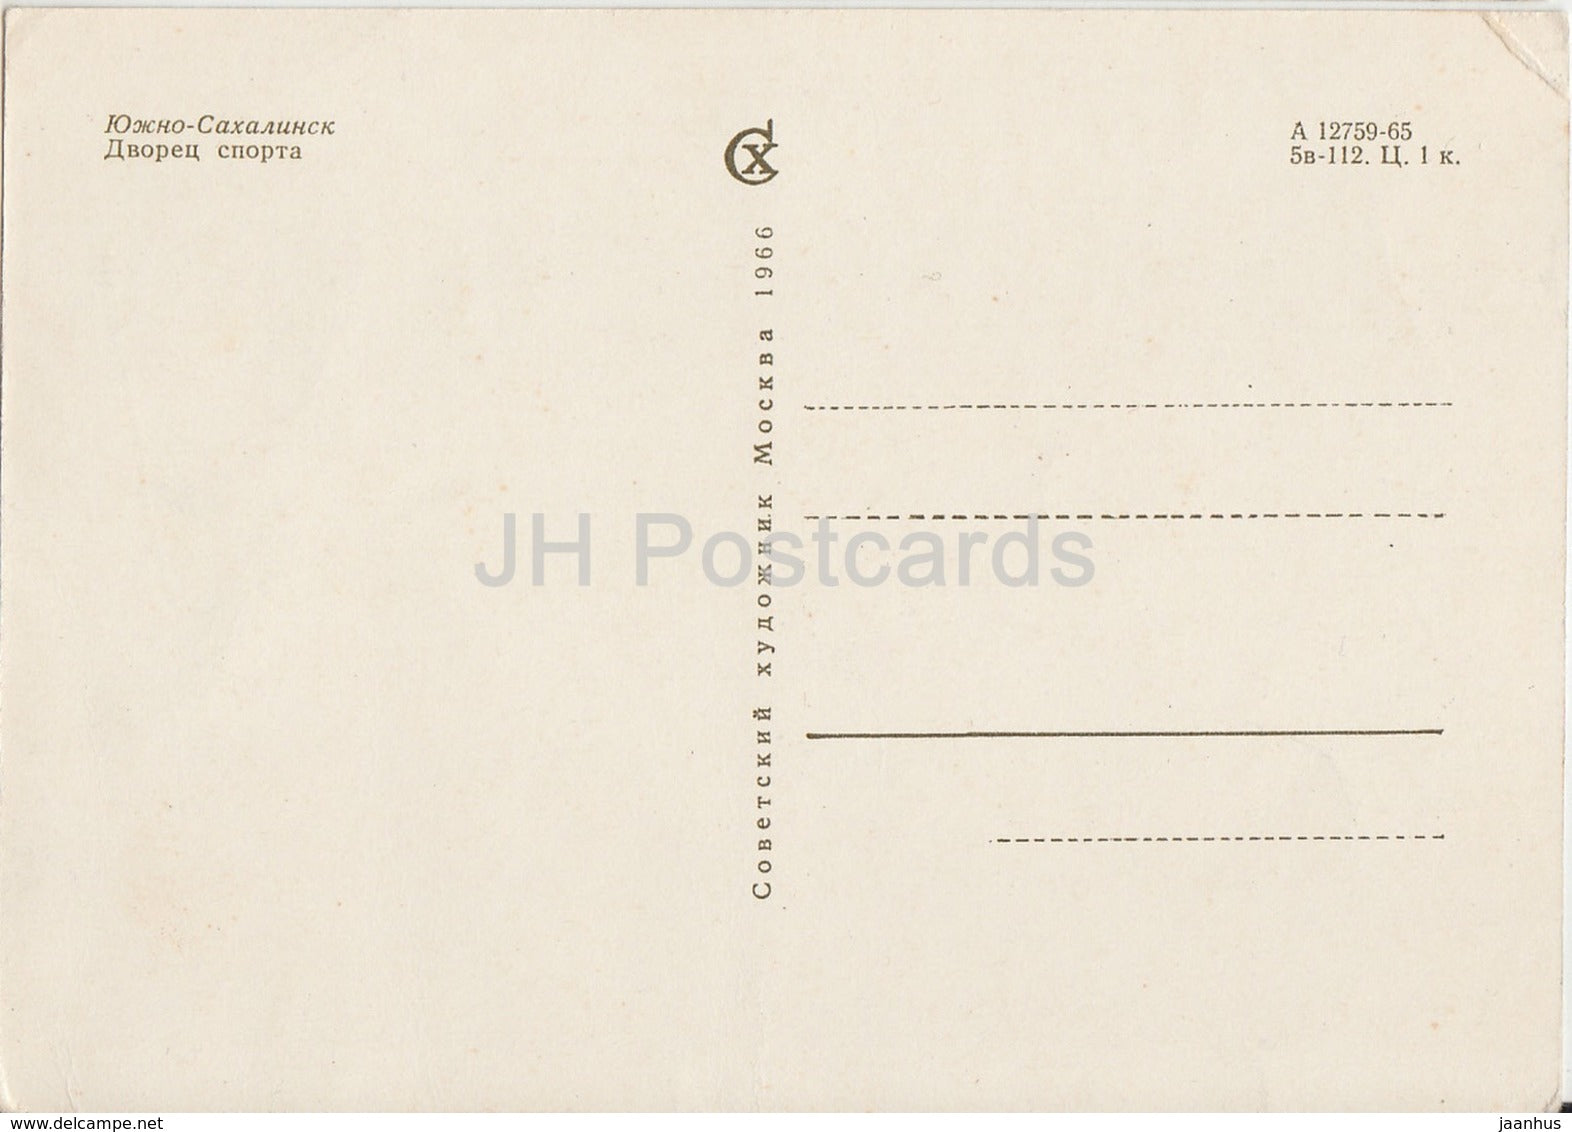 Yuzhno-Sakhalinsk - Palace of Sports - 1966 - Russia USSR - unused - JH Postcards